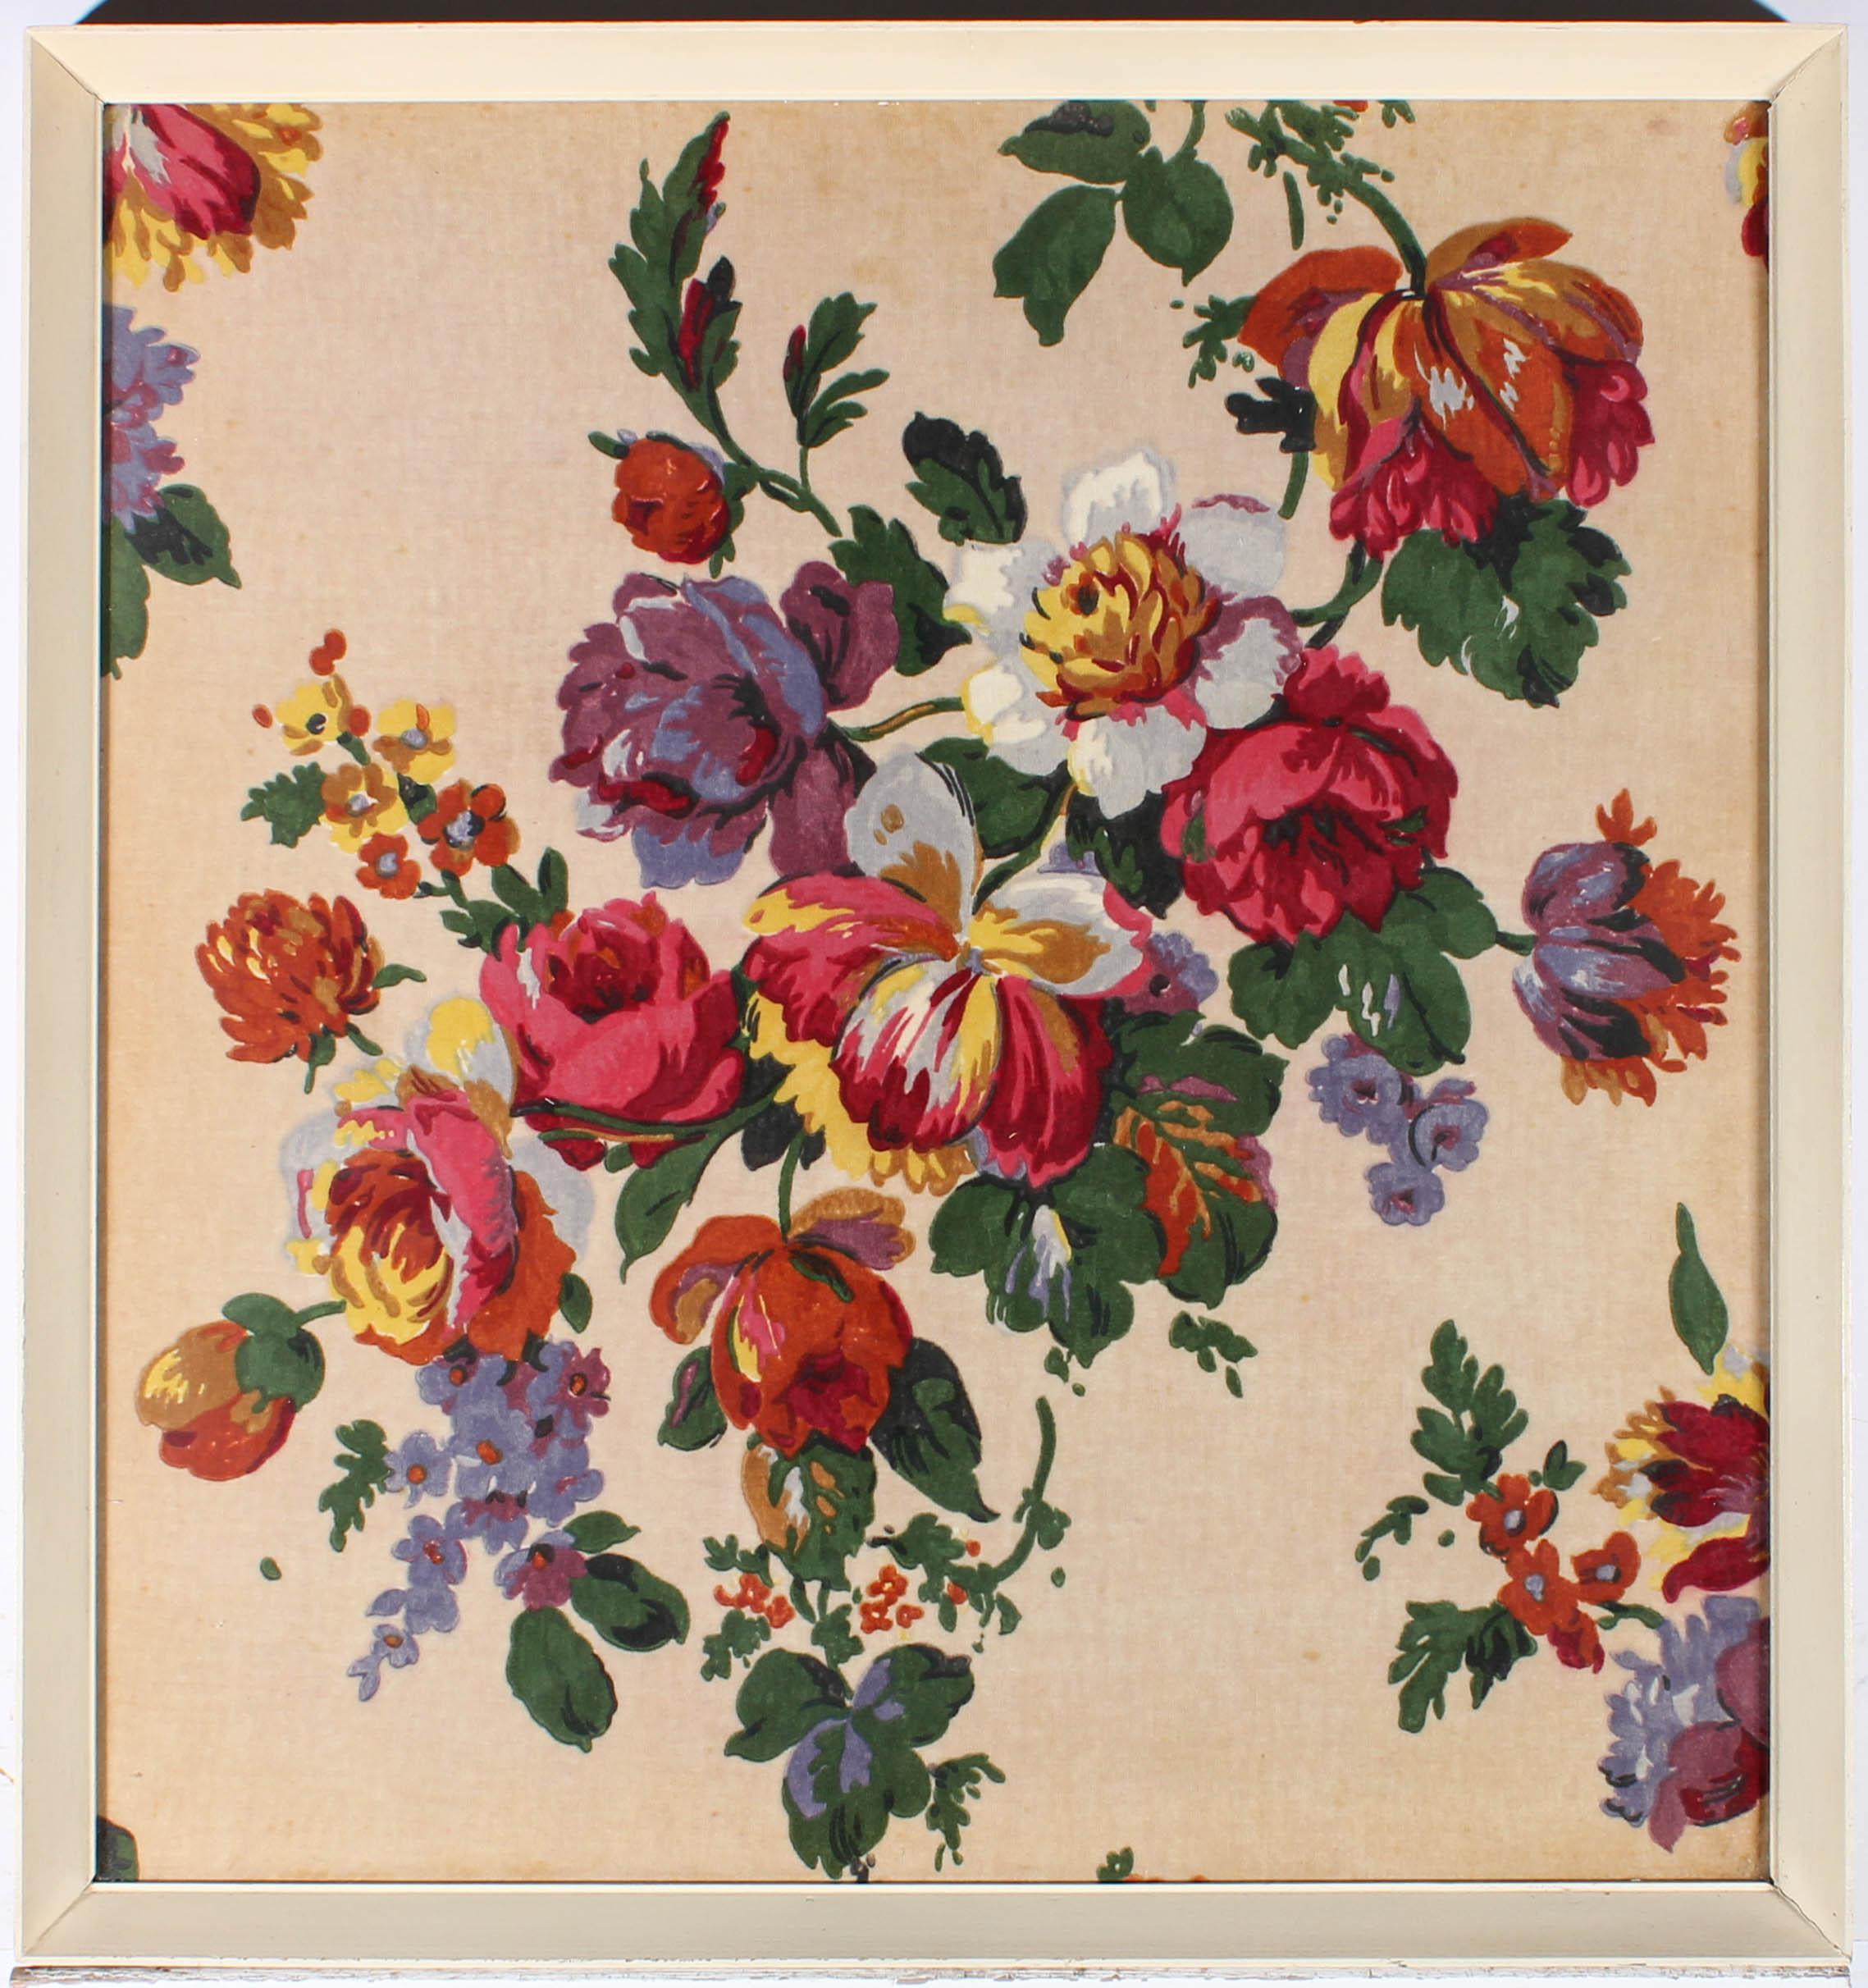 Unknown Still-Life Print - 20th Century Silkscreen - Floral Pattern